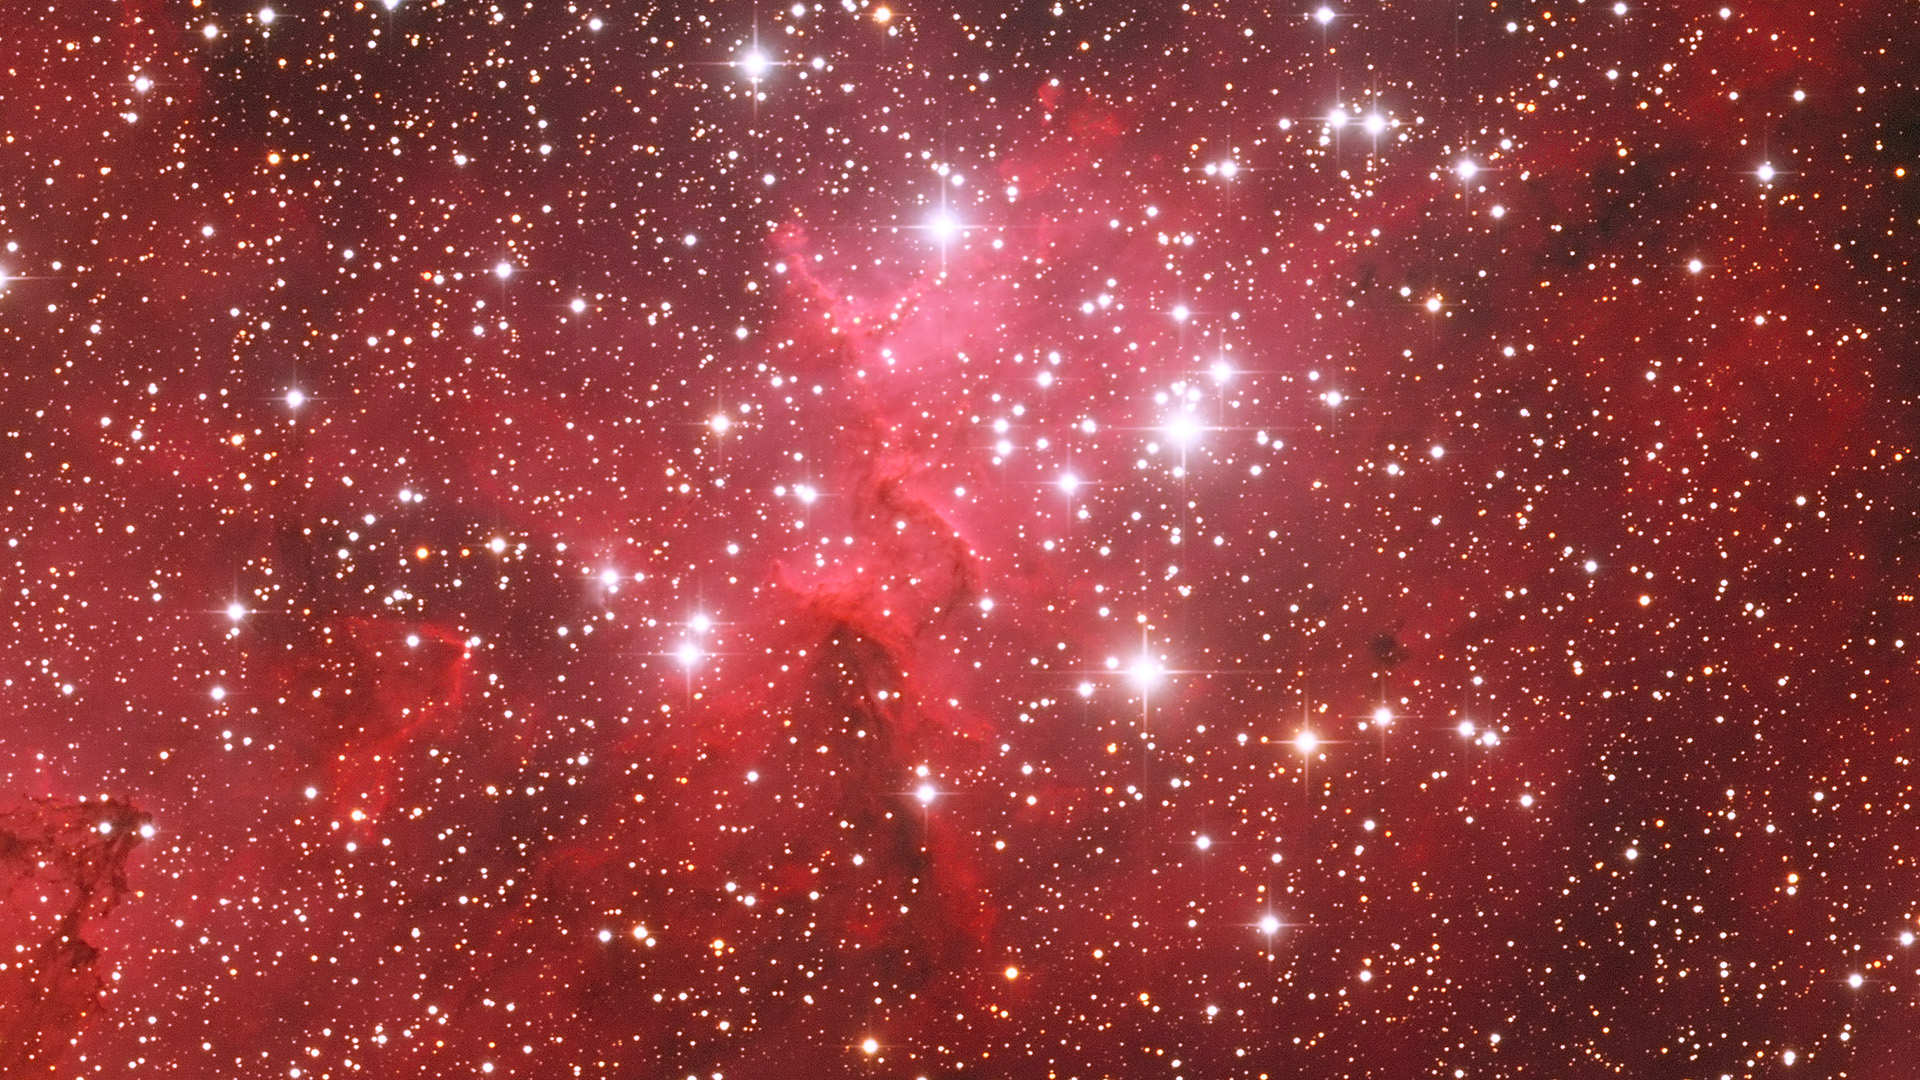 IC1805_Heart_Nebula_CloseUp_Melotte15_crop_1920px_q10.jpg